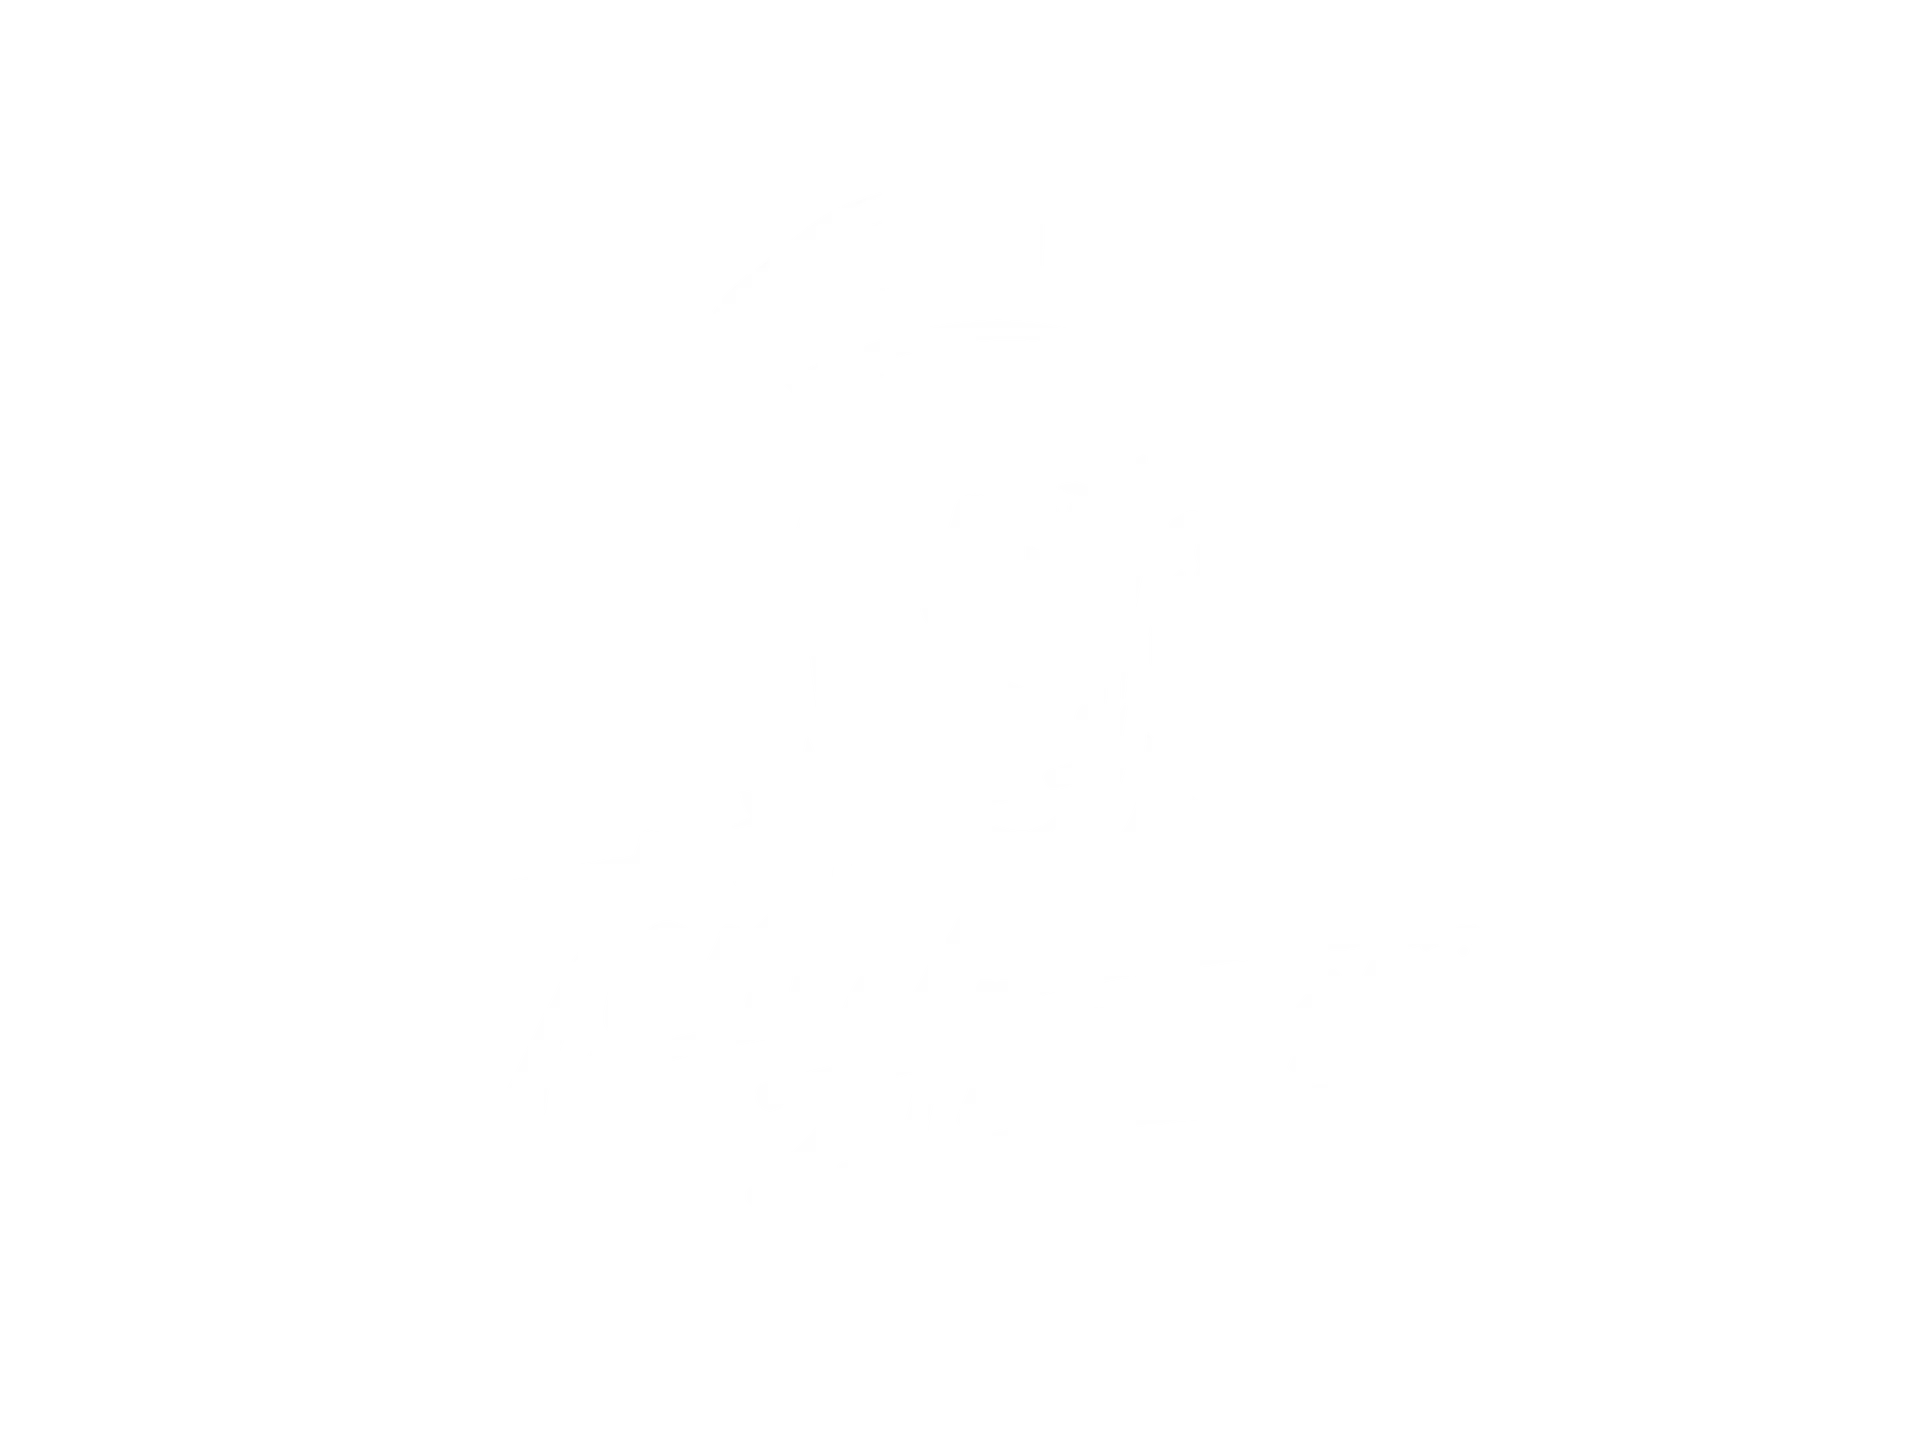 Tony Argent